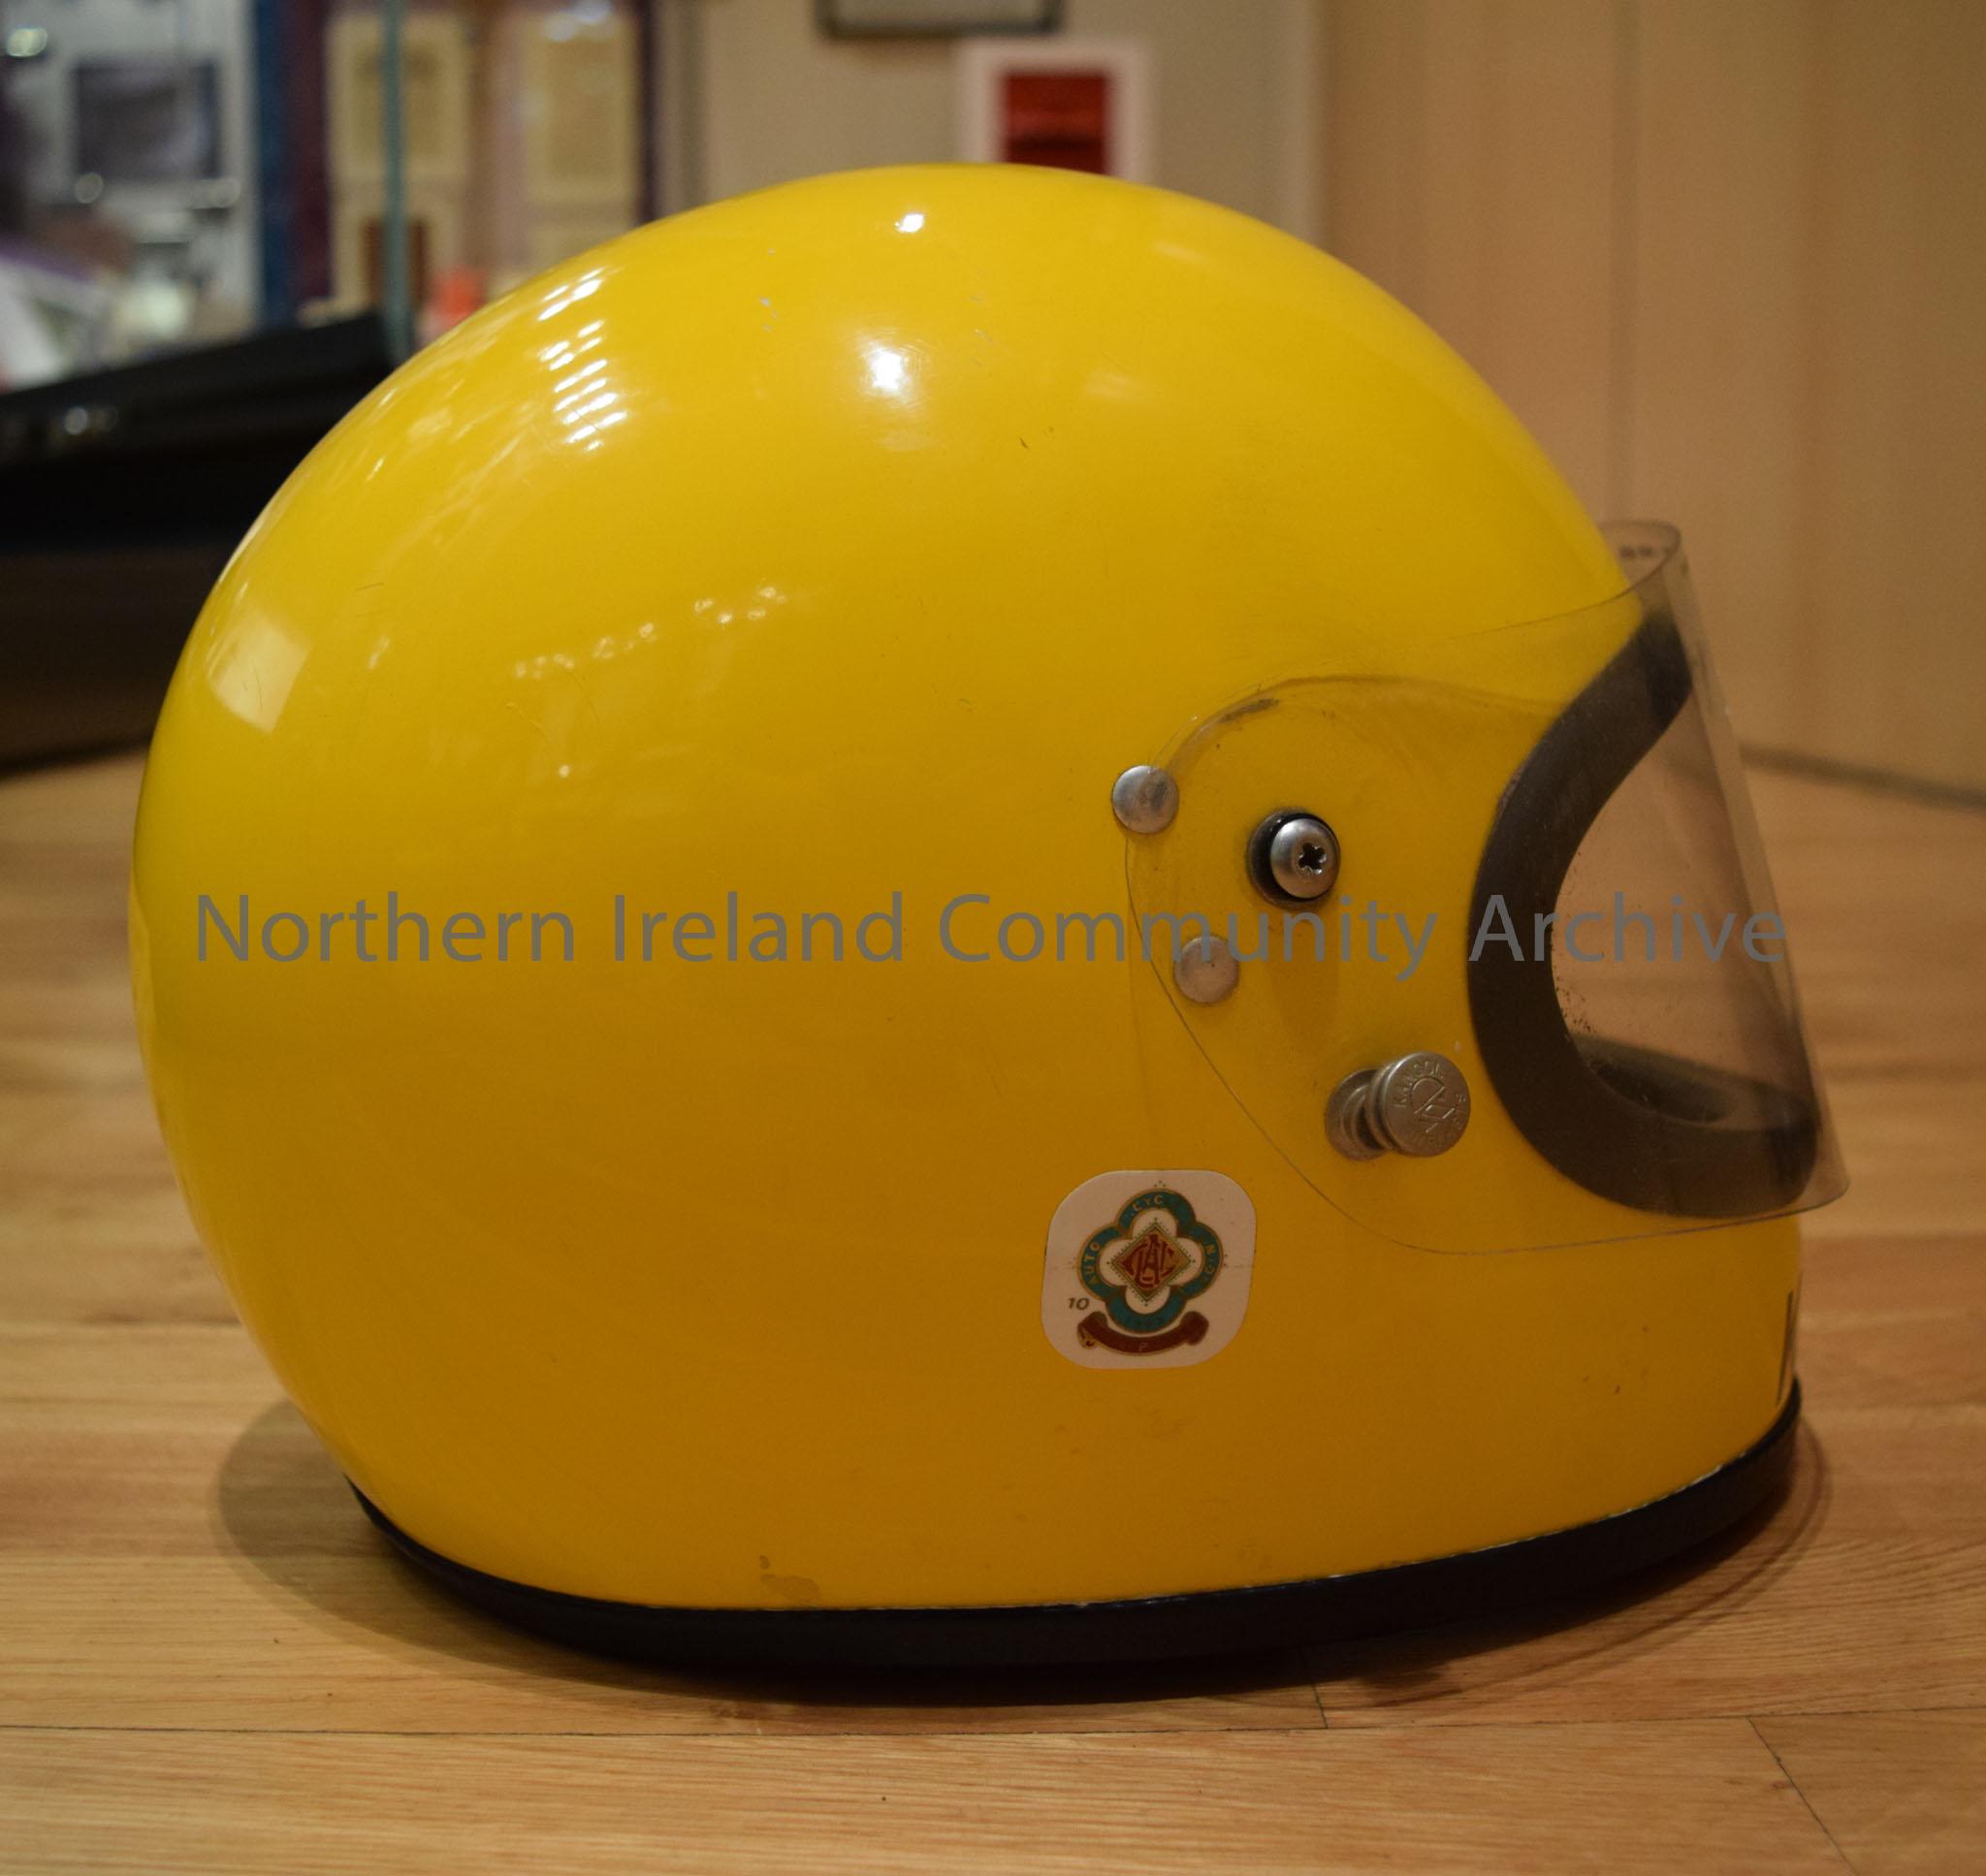 Kangol motorcycle helmet belonging to Joey Dunlop. Matt yellow helmet with a black strip down the middle. – 2016.106 (5)